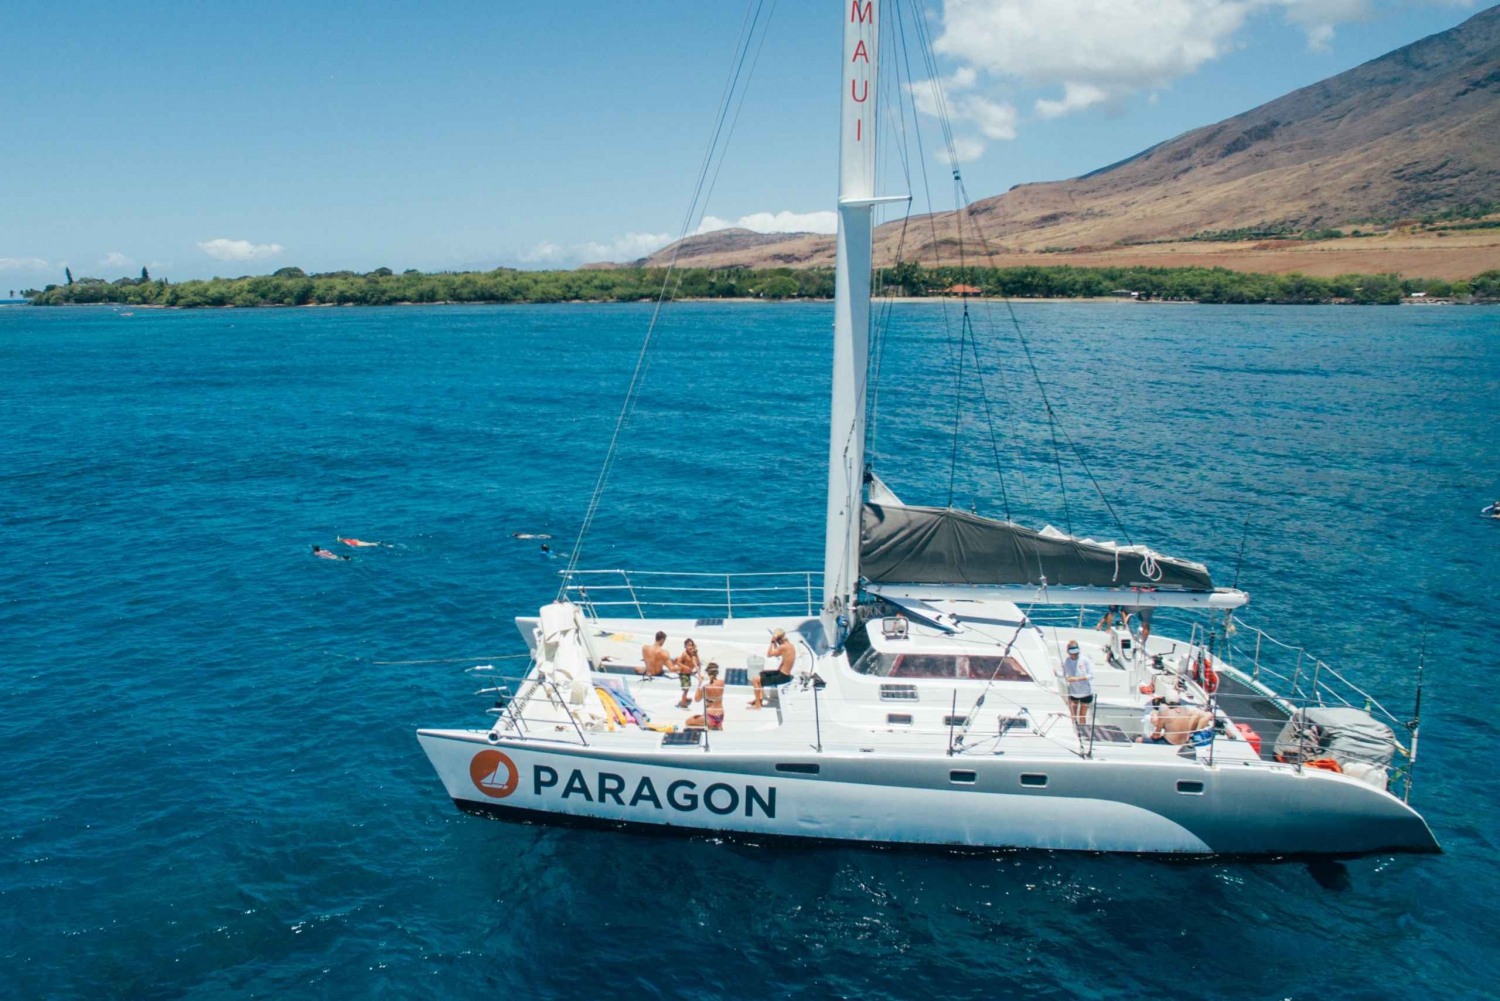 Maui: Lahaina Sailboat Cruise with Drinks and Snacks